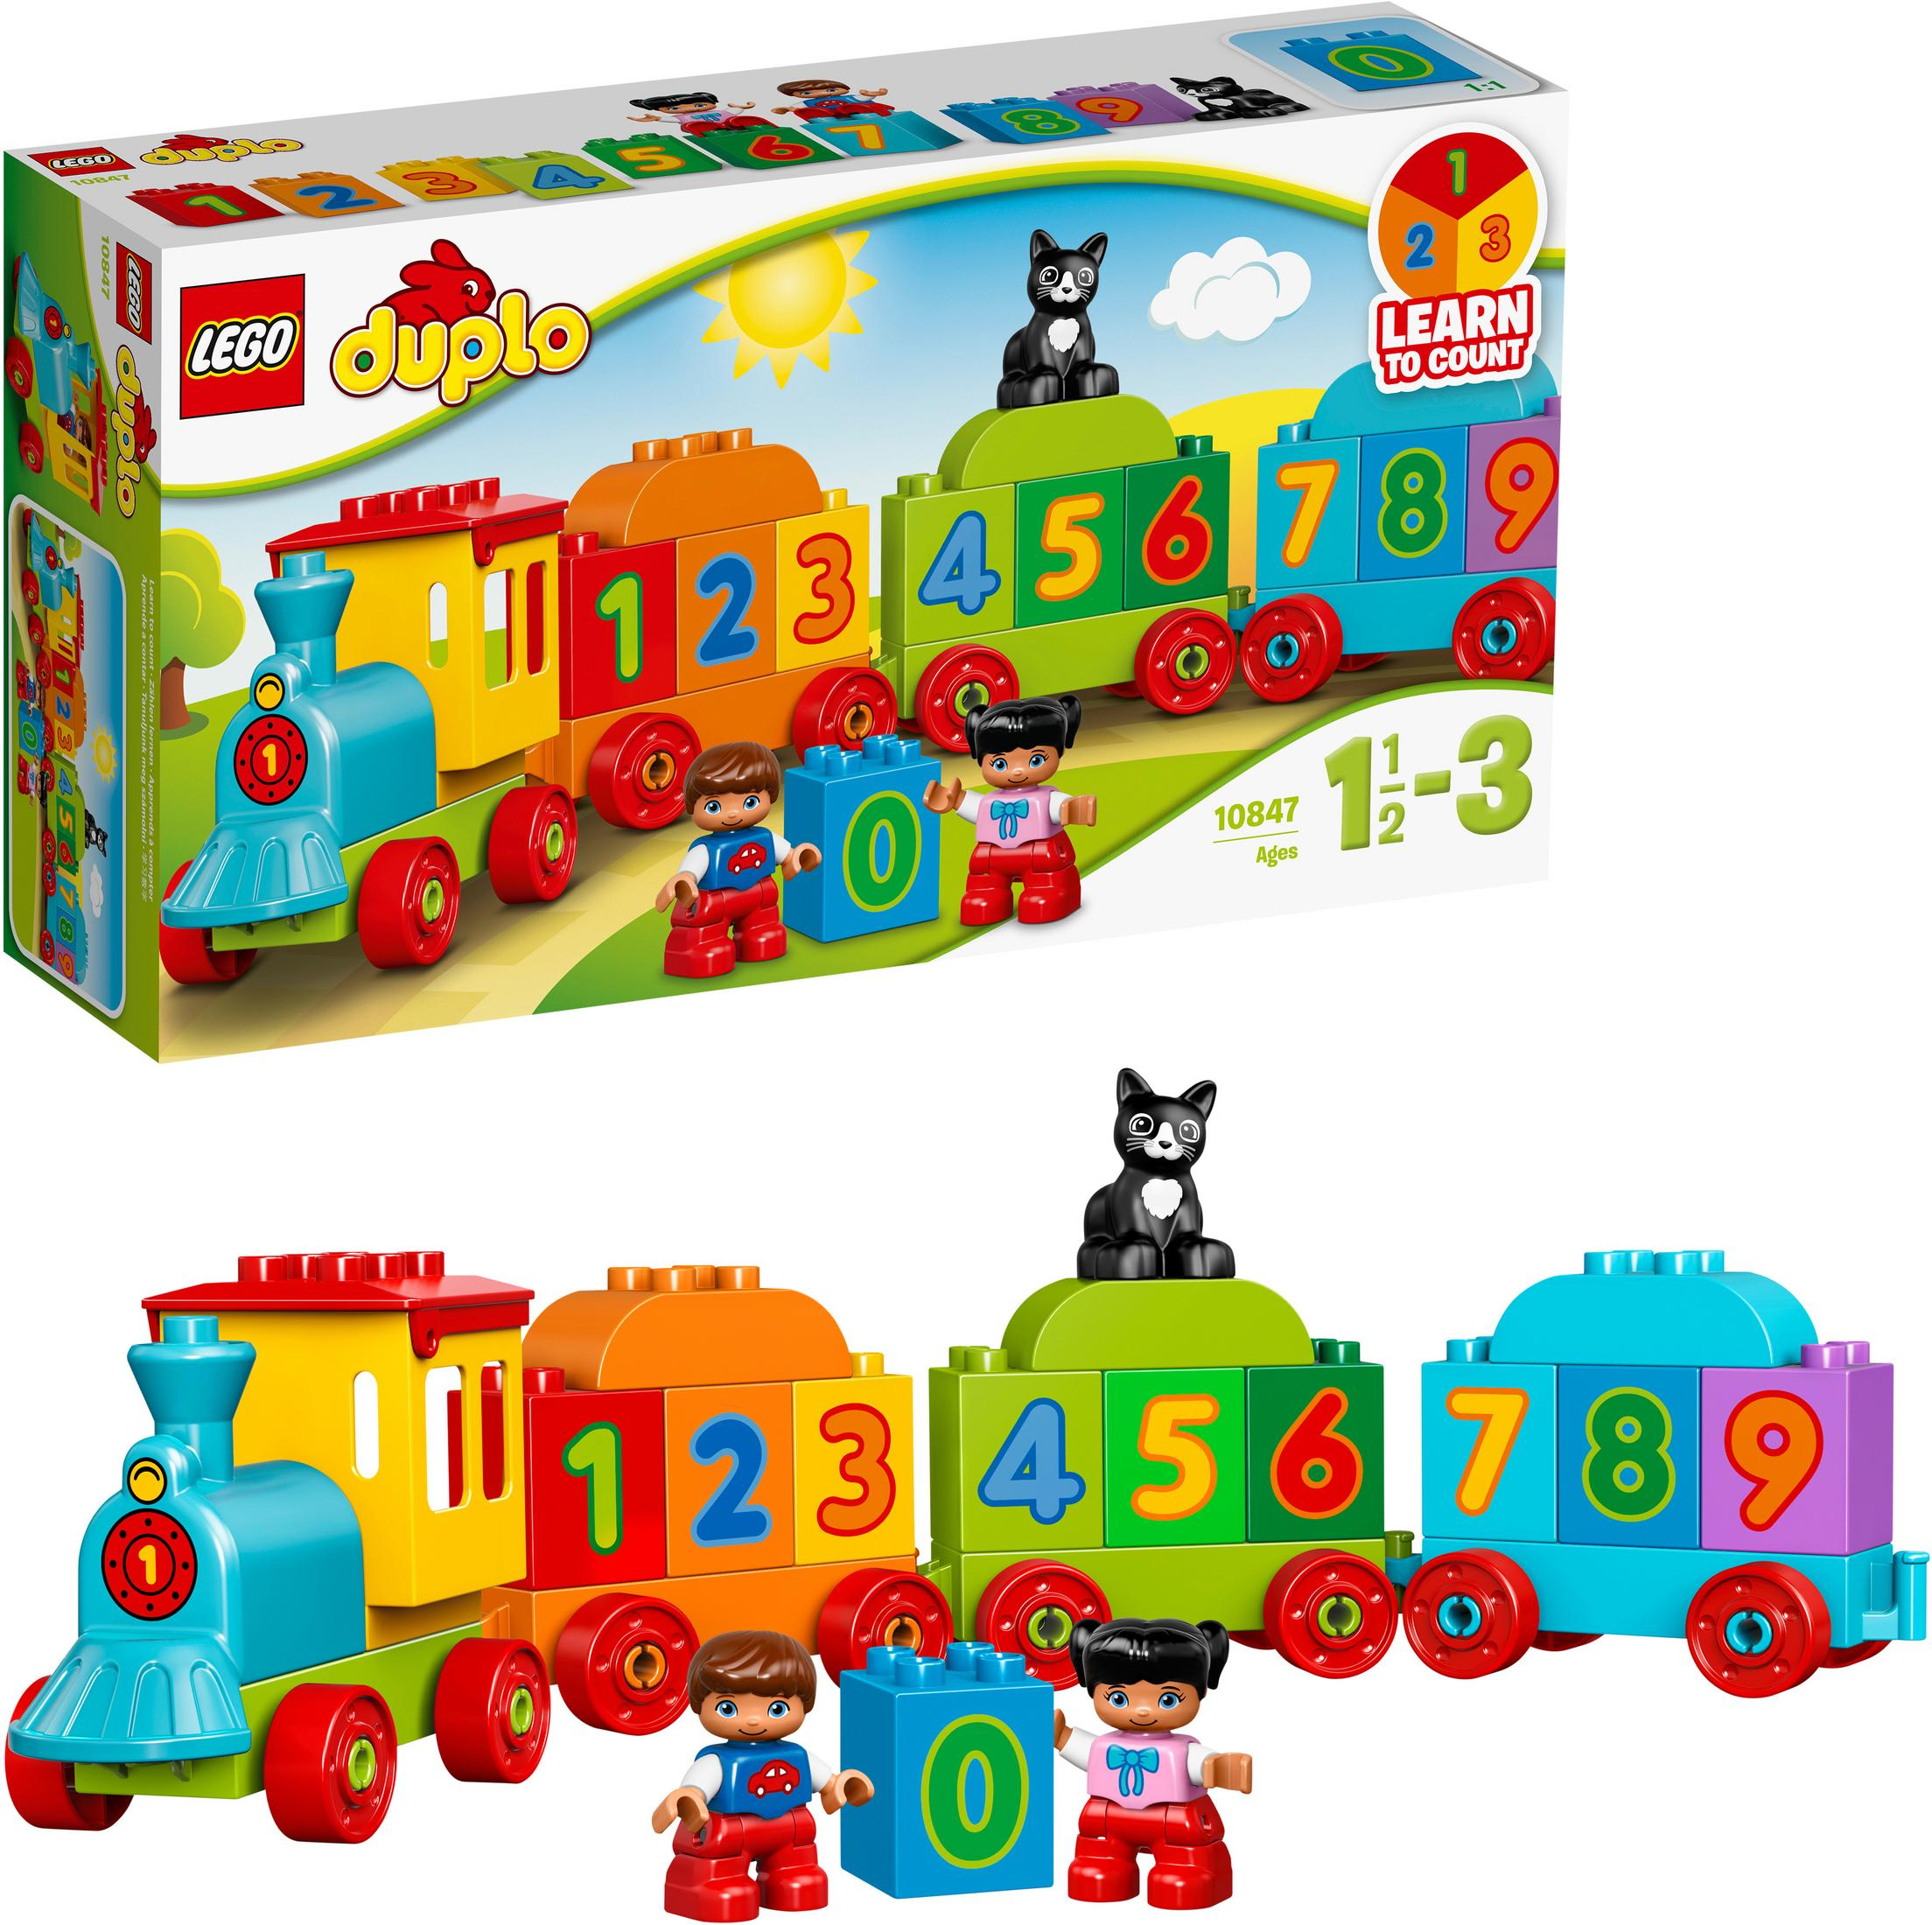 LEGO ZAHLENZUG Bausatz, 10847 Mehrfarbig